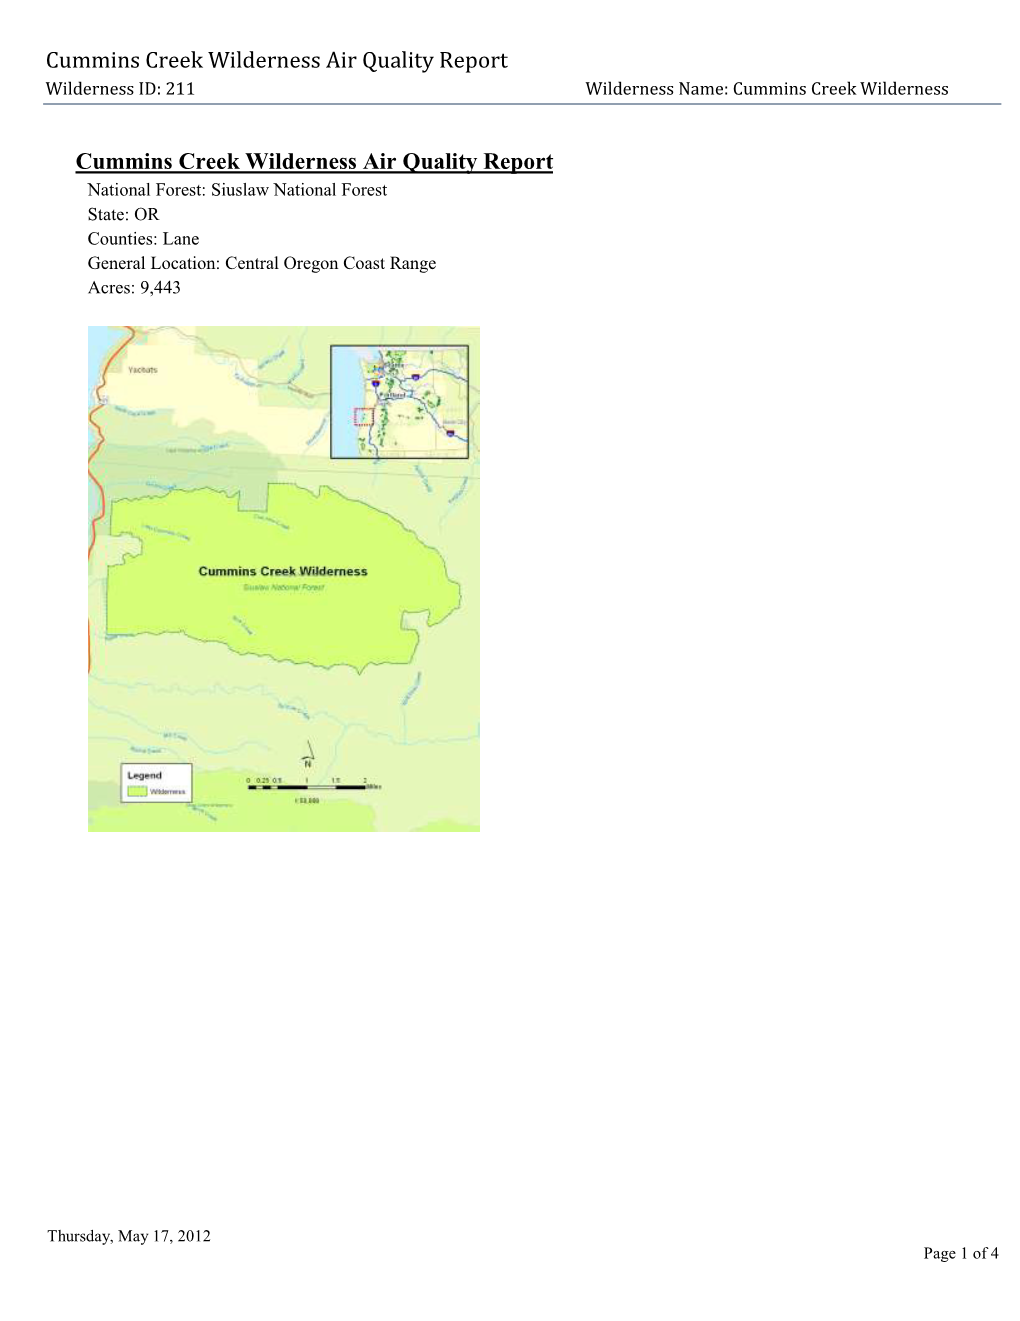 Cummins Creek Wilderness Air Quality Report, 2012